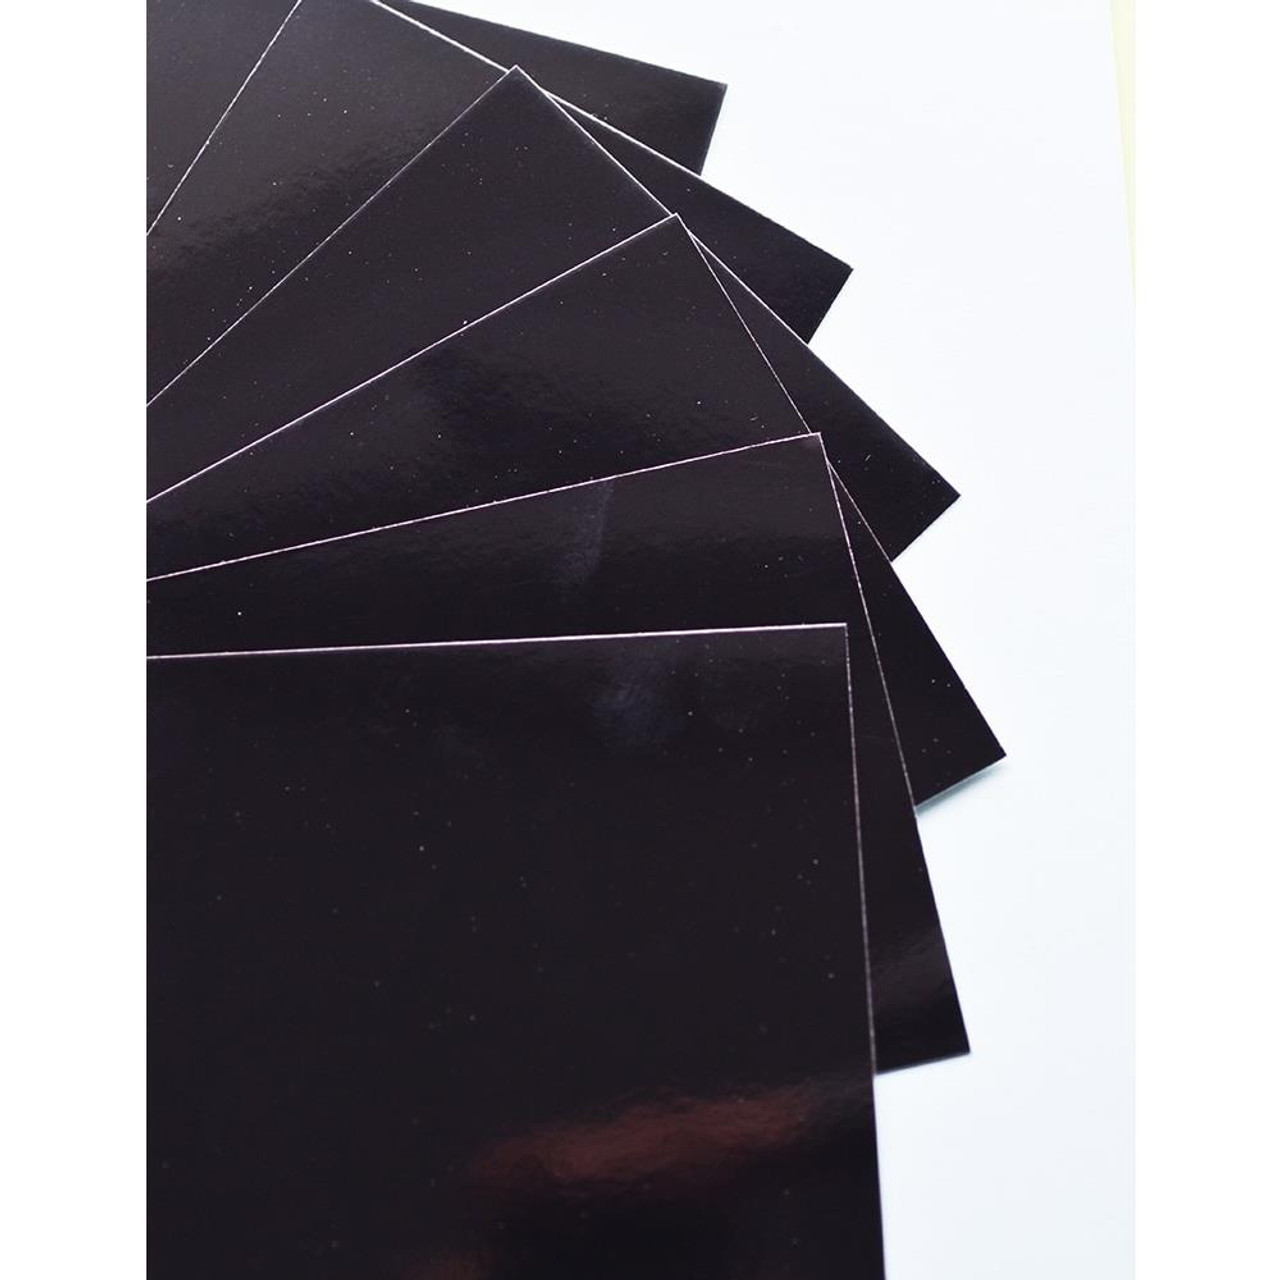 Sizzix Surfacez - Shrink Plastic, 8 1/2 x 11, Gloss, Black, 10